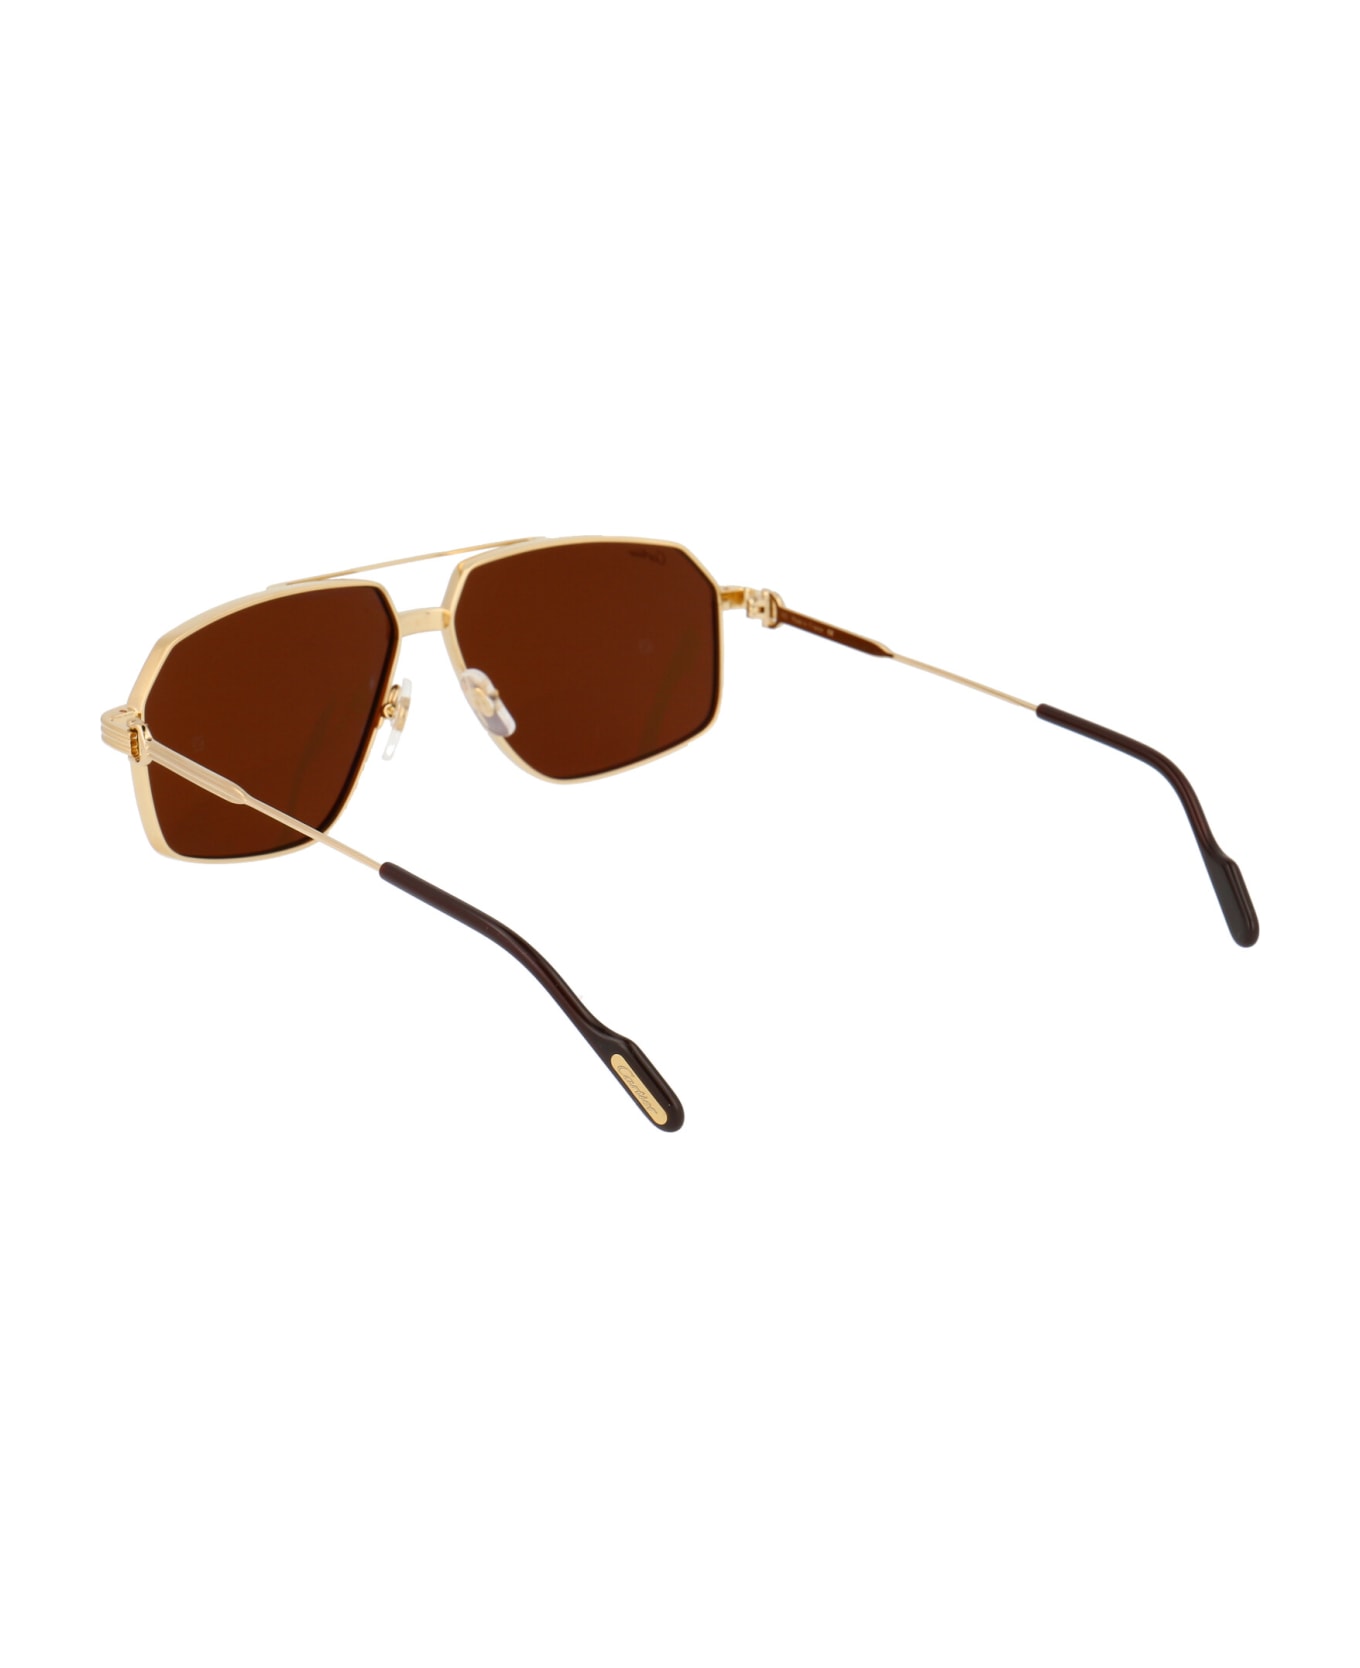 Cartier Eyewear Ct0270s Sunglasses - 002 GOLD GOLD BROWN